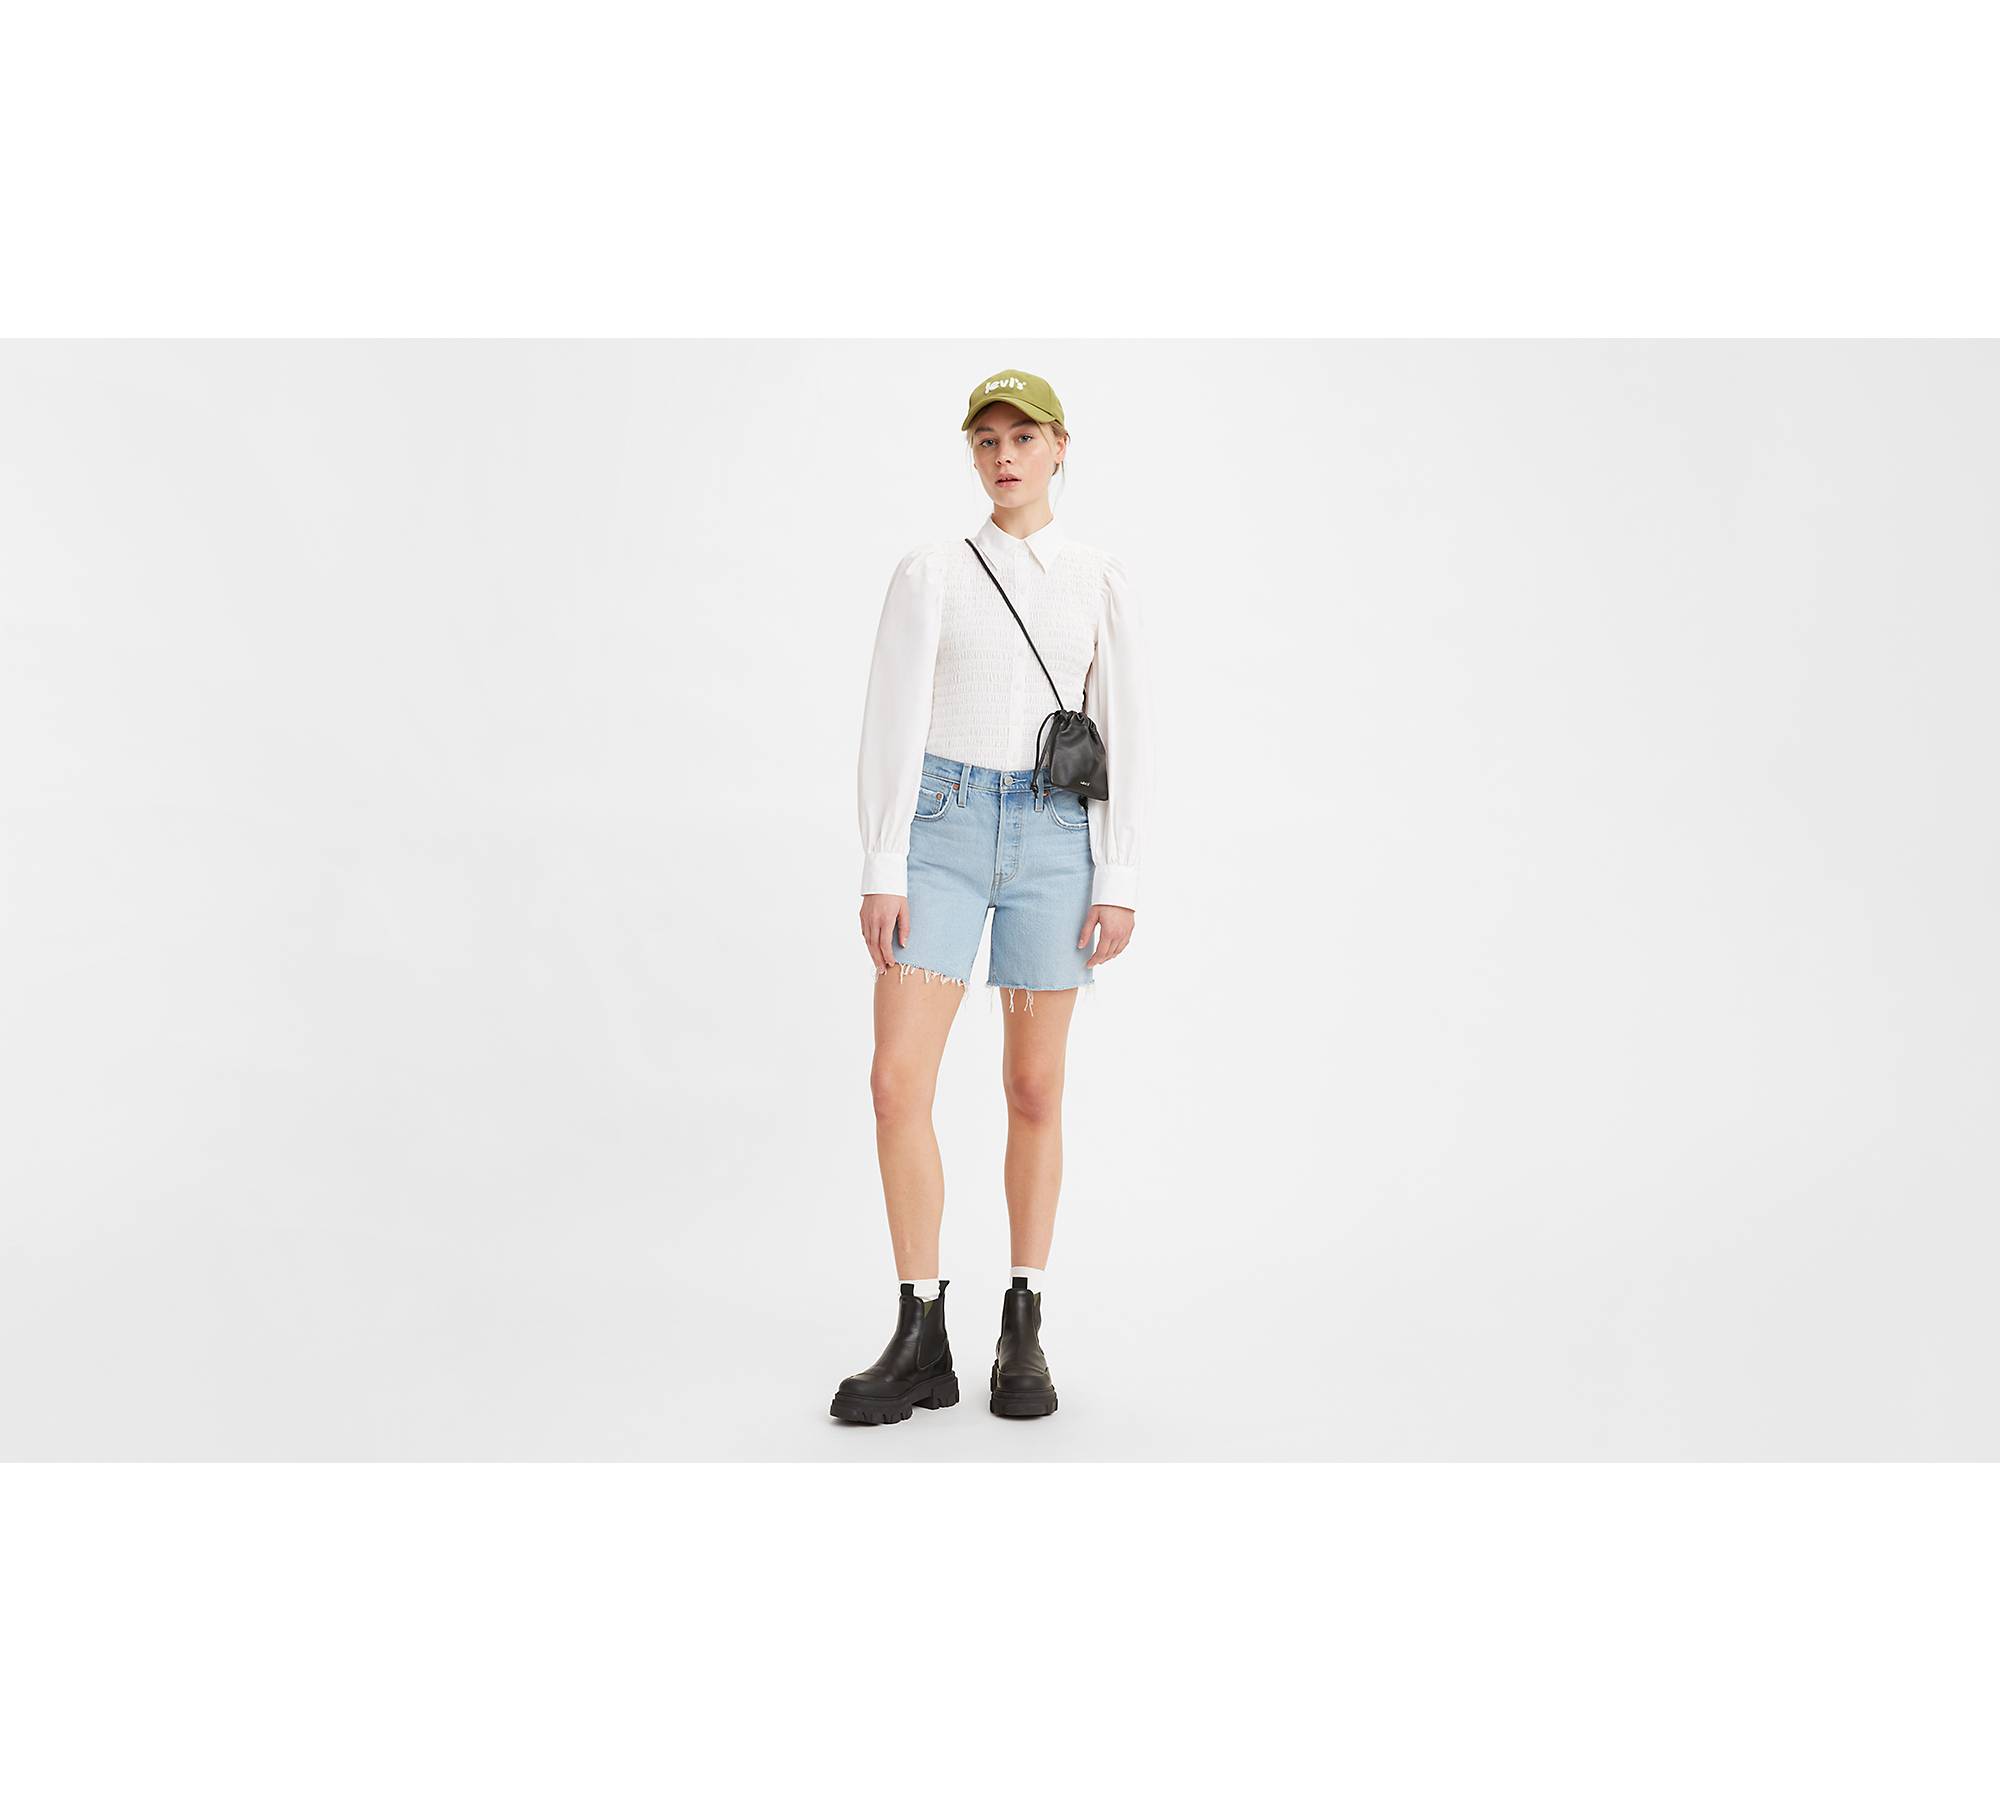 Levi's 501 Mid Thigh Shorts #Sponsored , #SPONSORED, #Levi, #Shorts, #Thigh,  #Mid